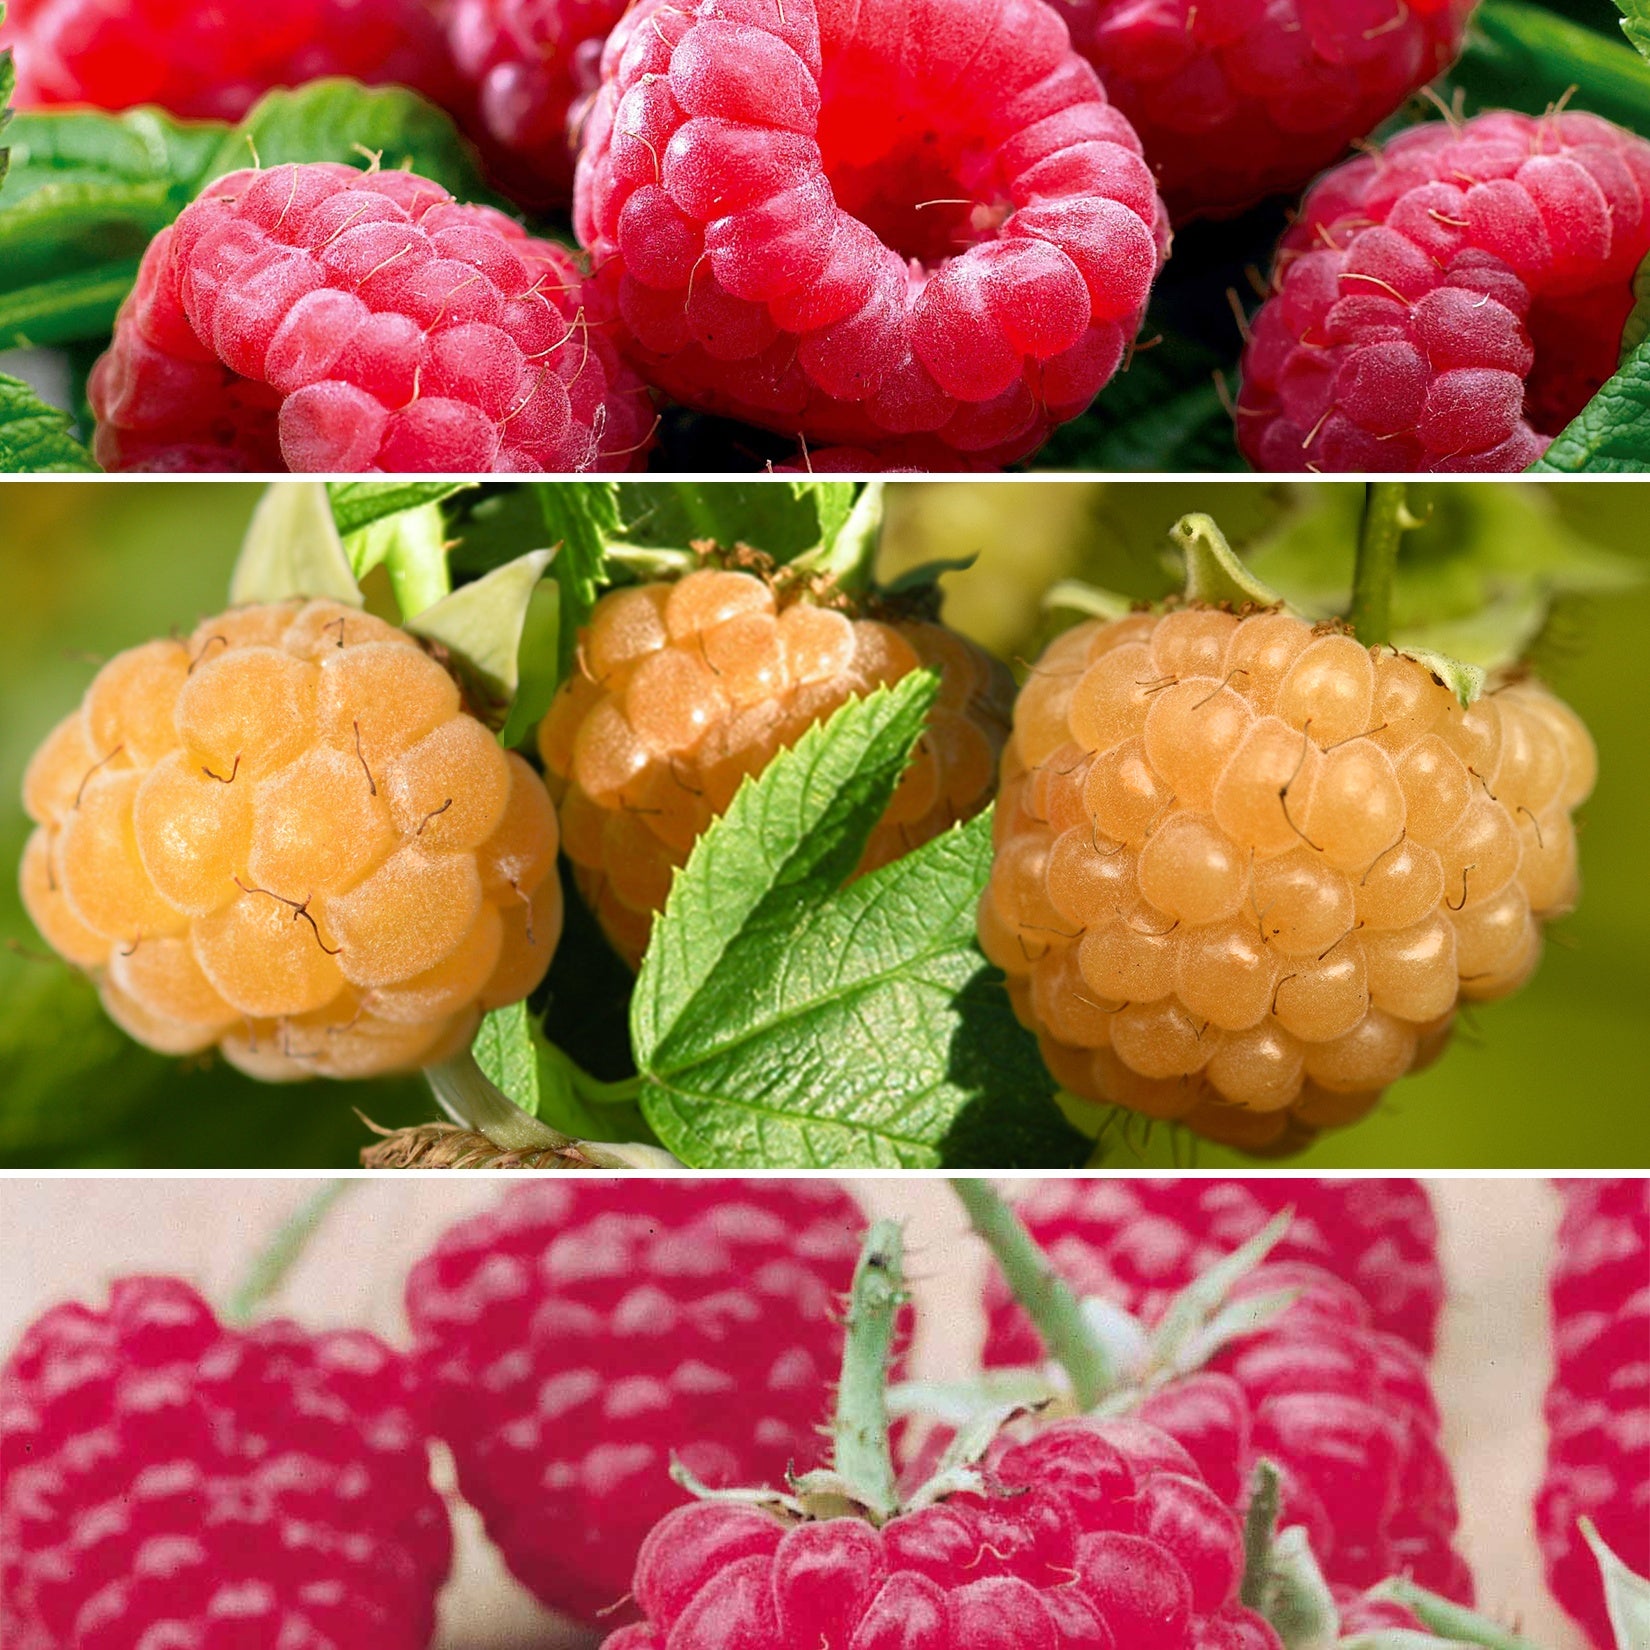 Himbeersammlung: Marastar,Fallgold, Sumo (x12) - Rubus idaeus marastar ®, sumo 2, fallgold - Obst